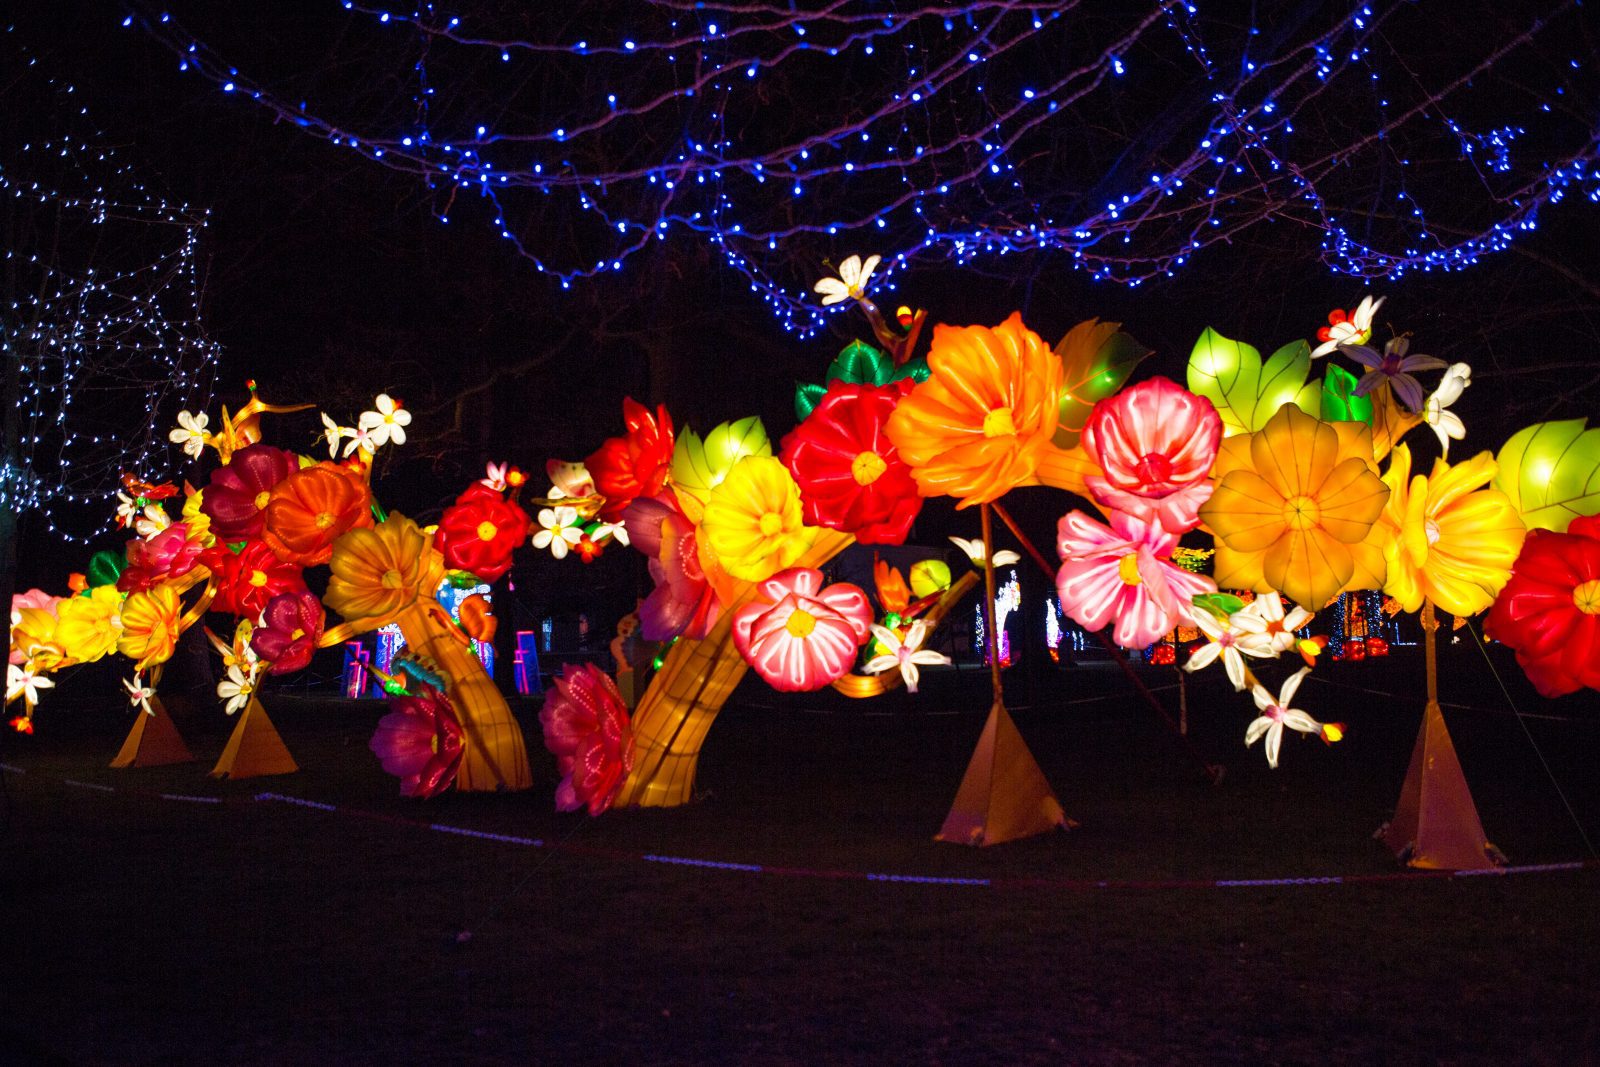 Lightopia returns to Heaton Park this Christmas with new festive &#8216;fantasy&#8217; installations, The Manc